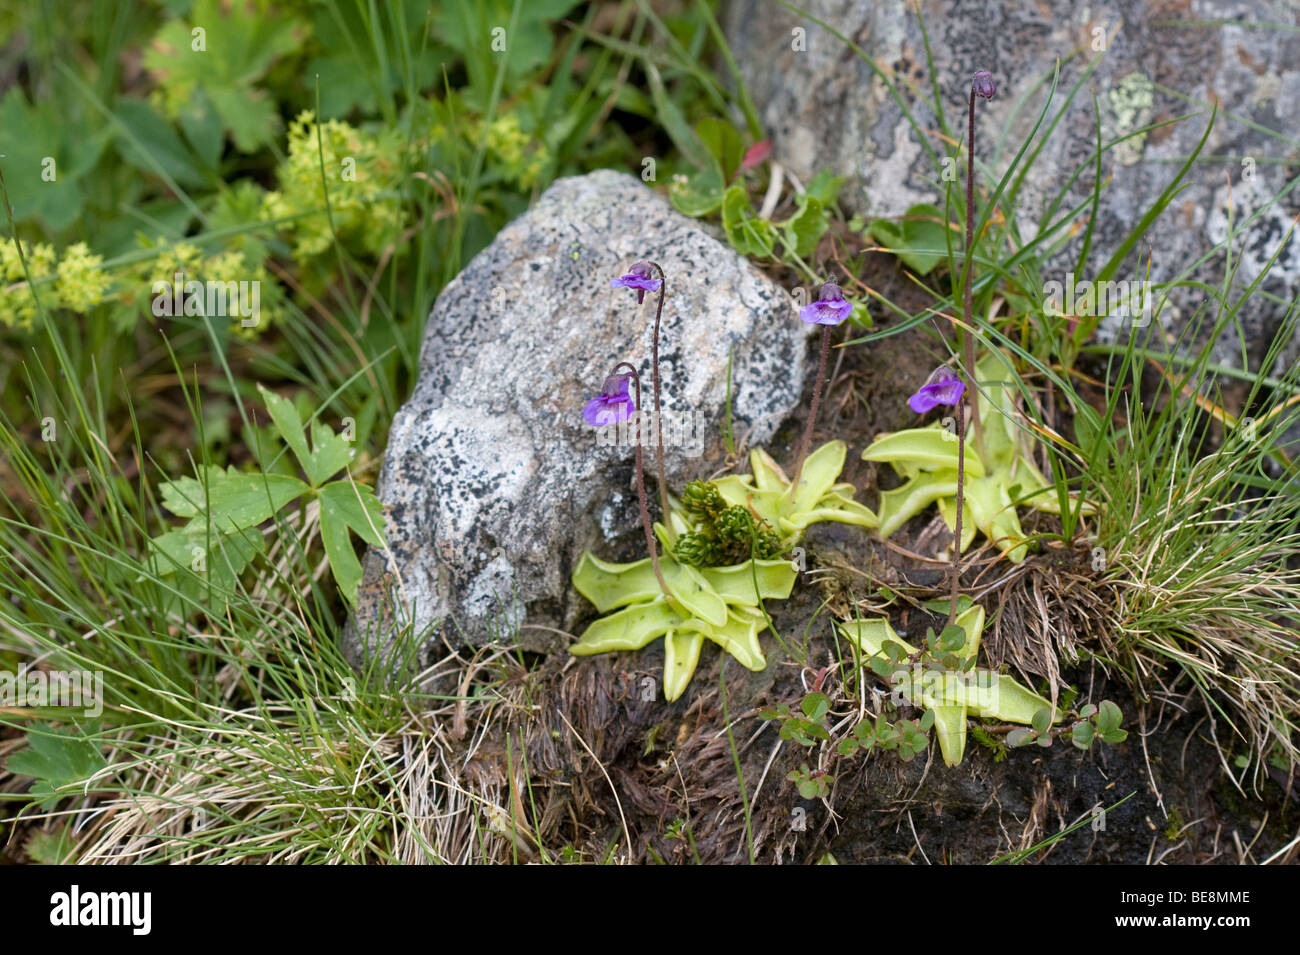 Vetblad; Common Butterwort Stock Photo